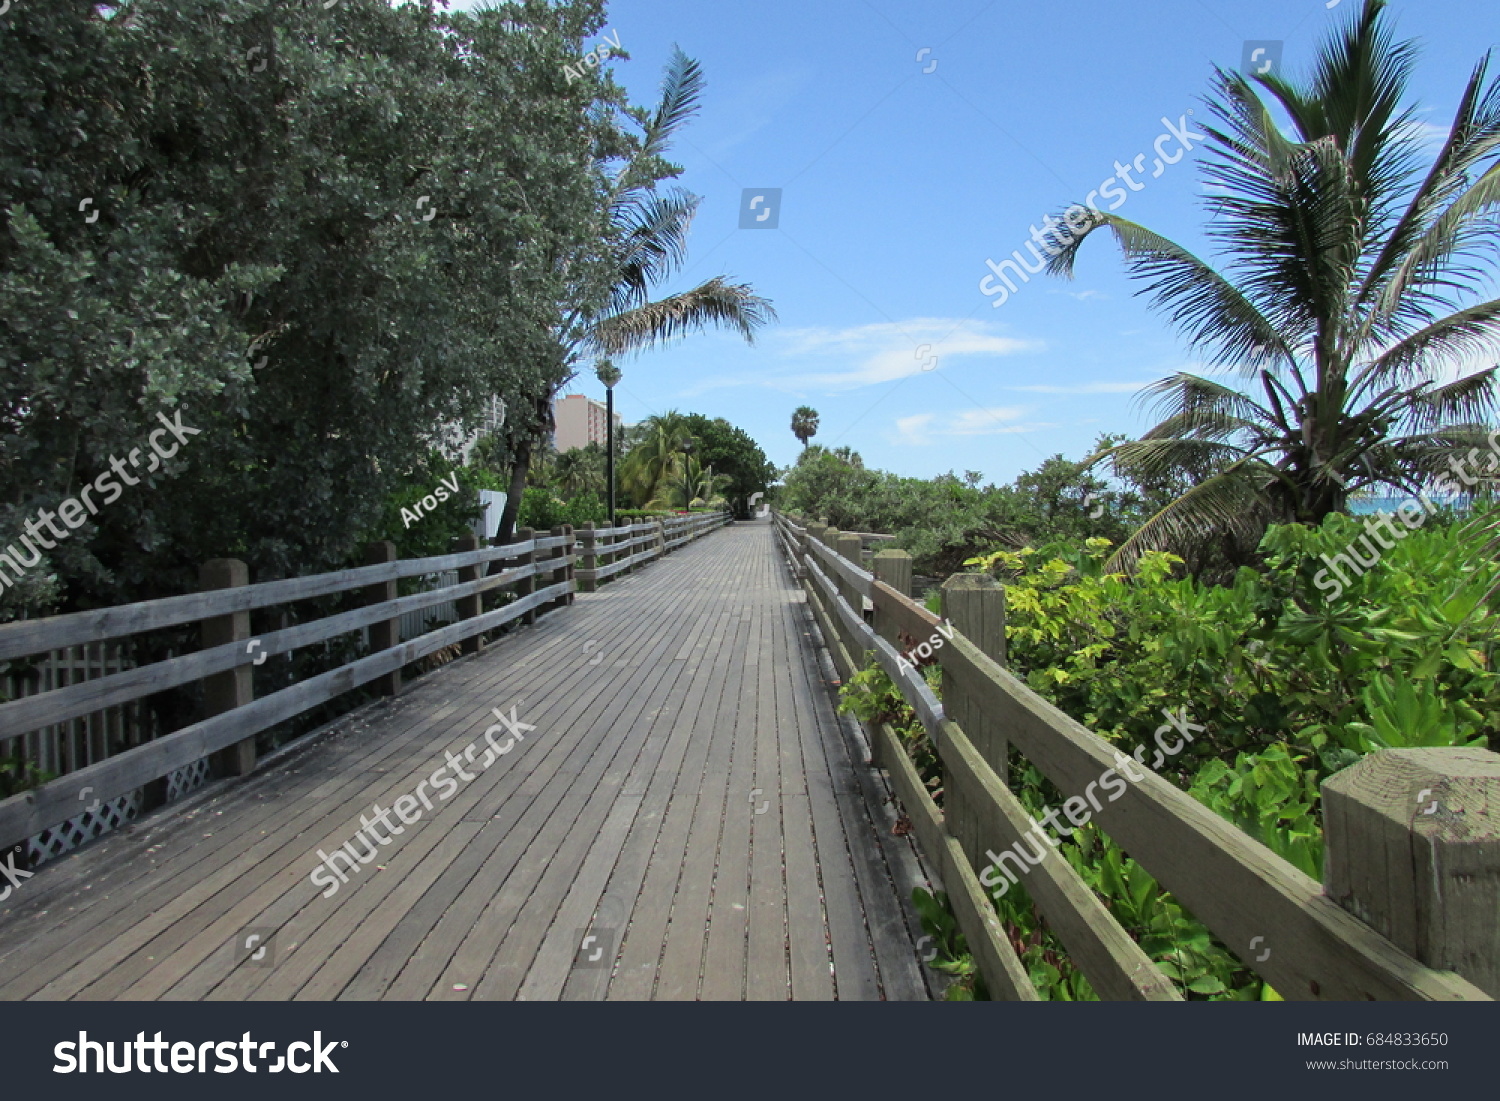 miami beach boardwalk address - ustrave